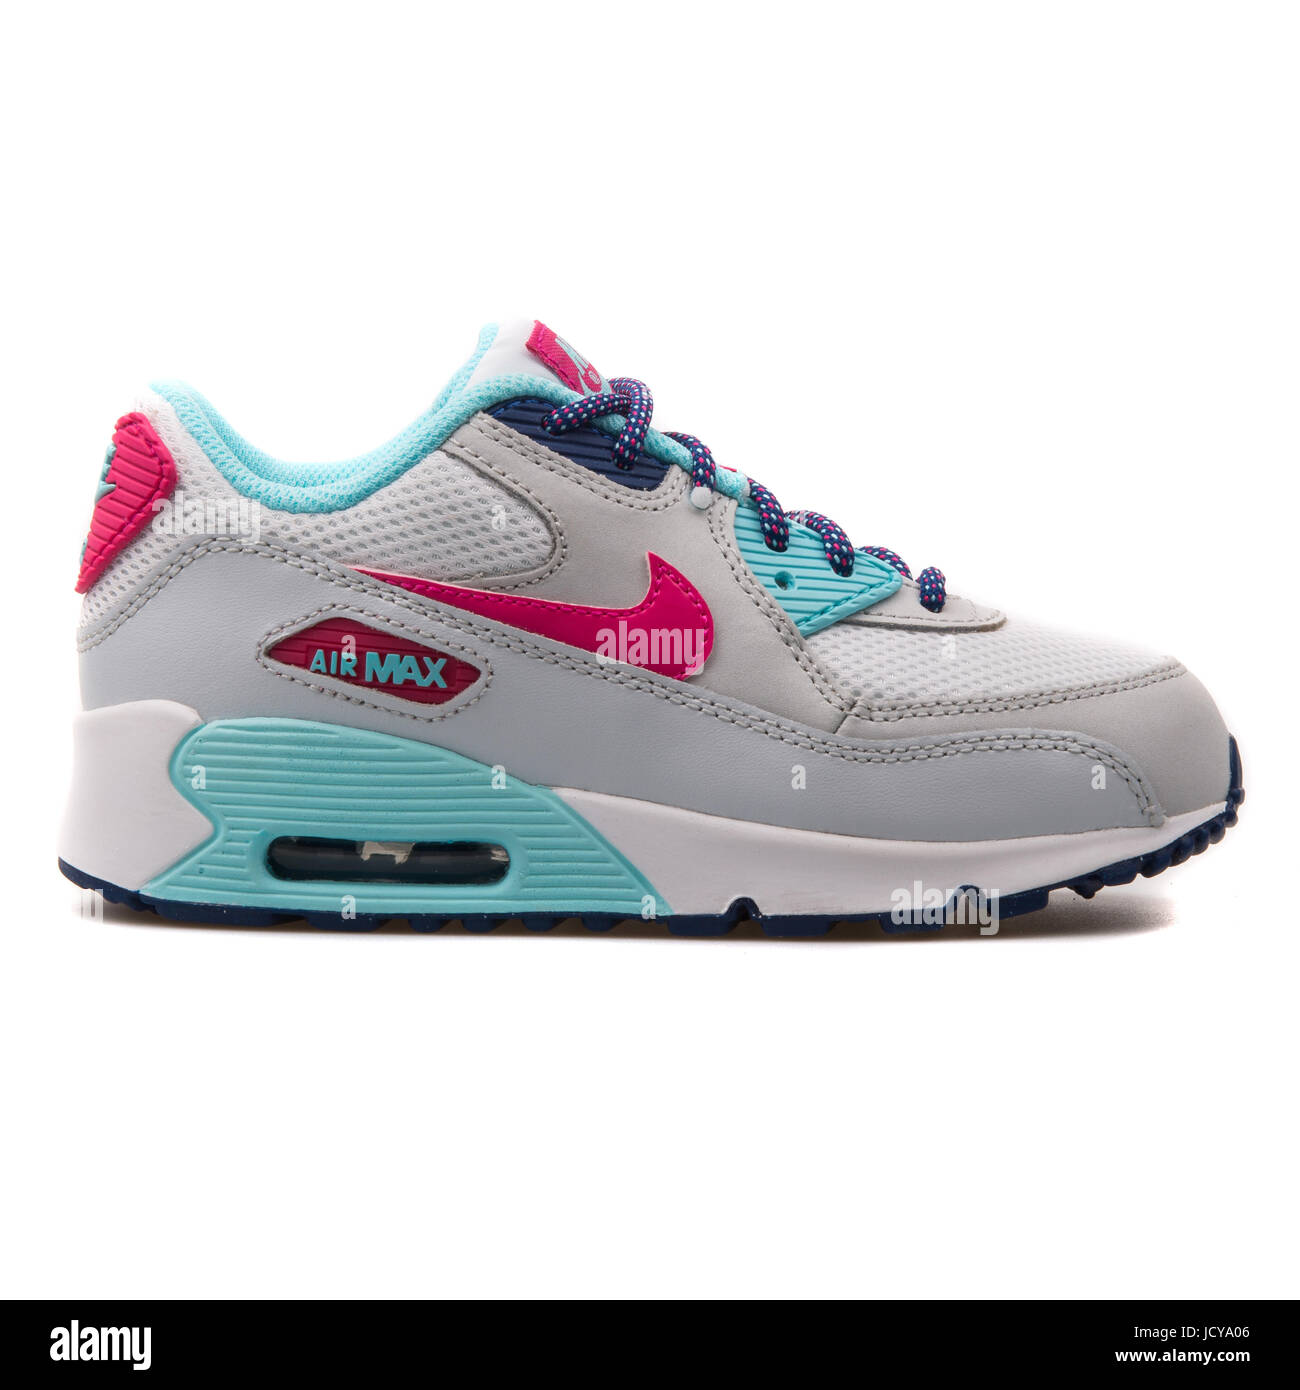 Nike Air Max 90 Malla (PS) Blanco, gris, rosa y turquesa Kids calzados  running - 724856-102 Fotografía de stock - Alamy